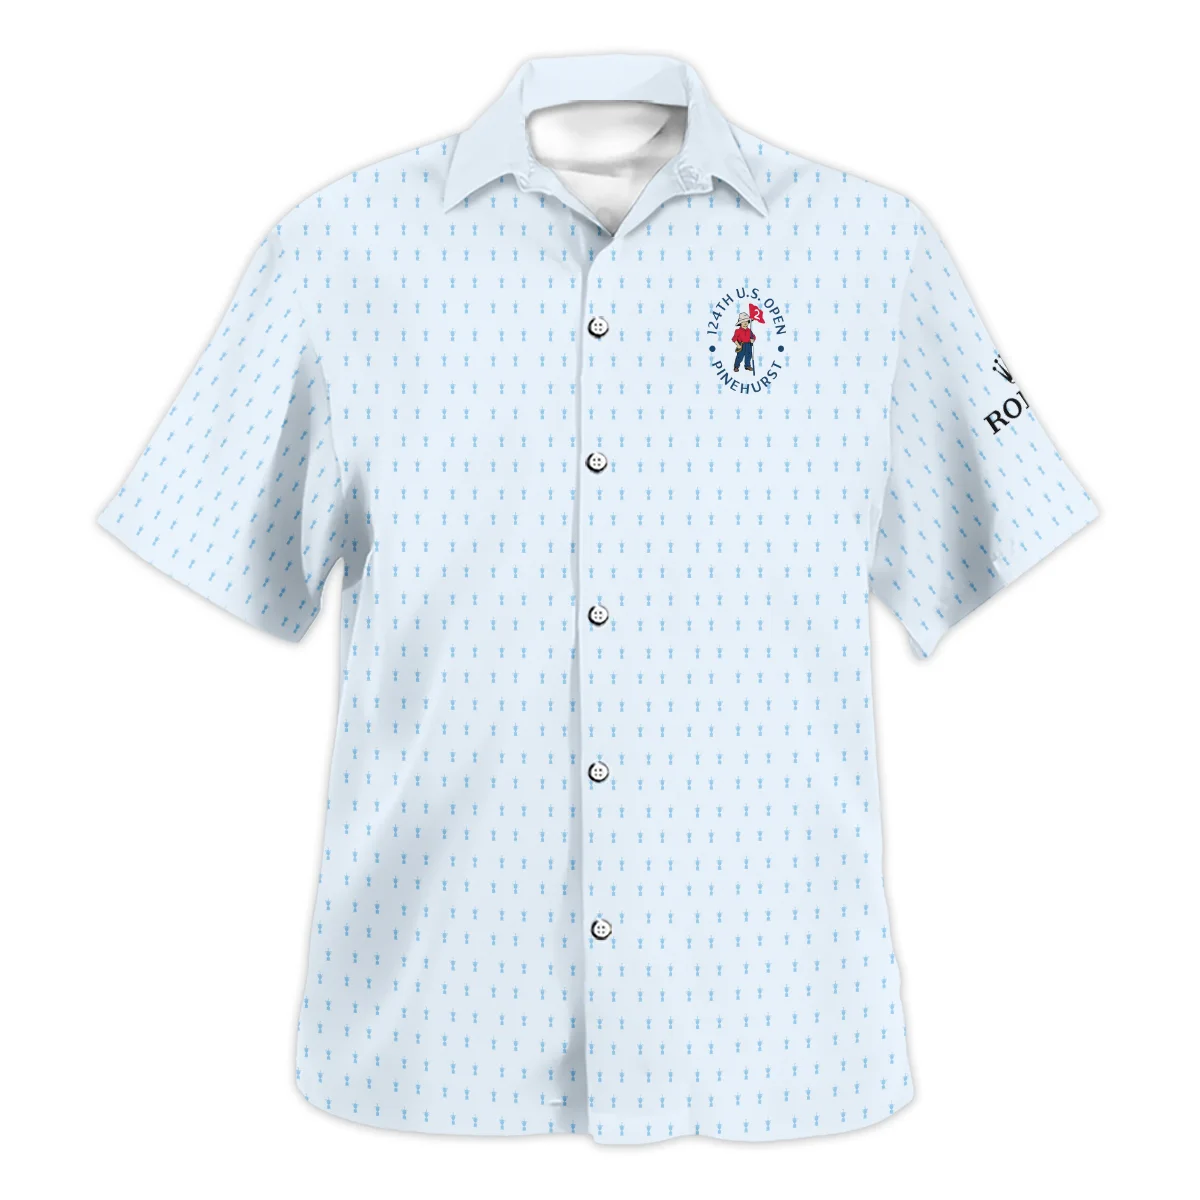 Golf Pattern Cup Light Blue Green 124th U.S. Open Pinehurst Rolex Polo Shirt Style Classic Polo Shirt For Men